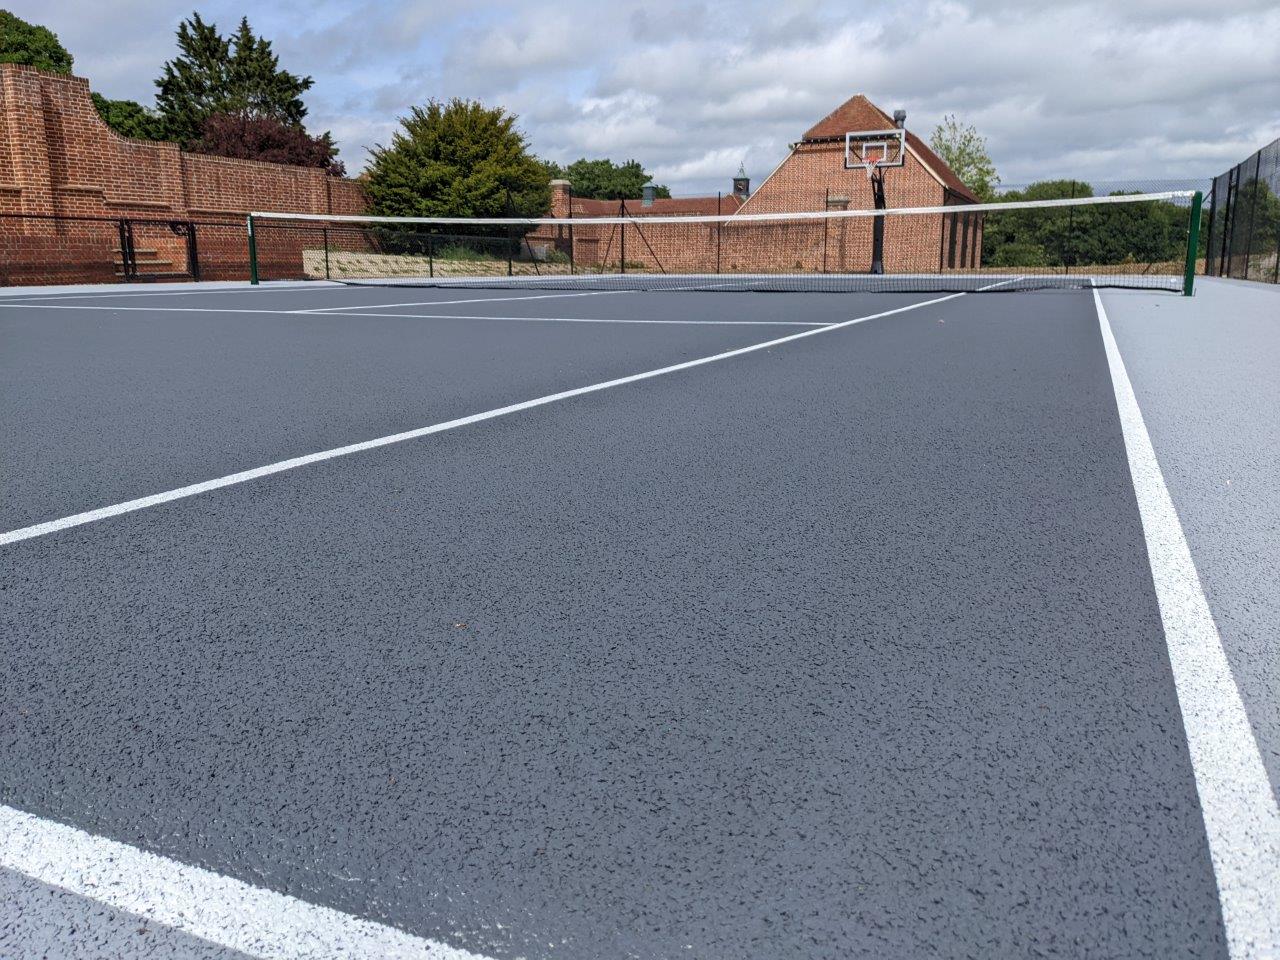 Colour-coated tennis court